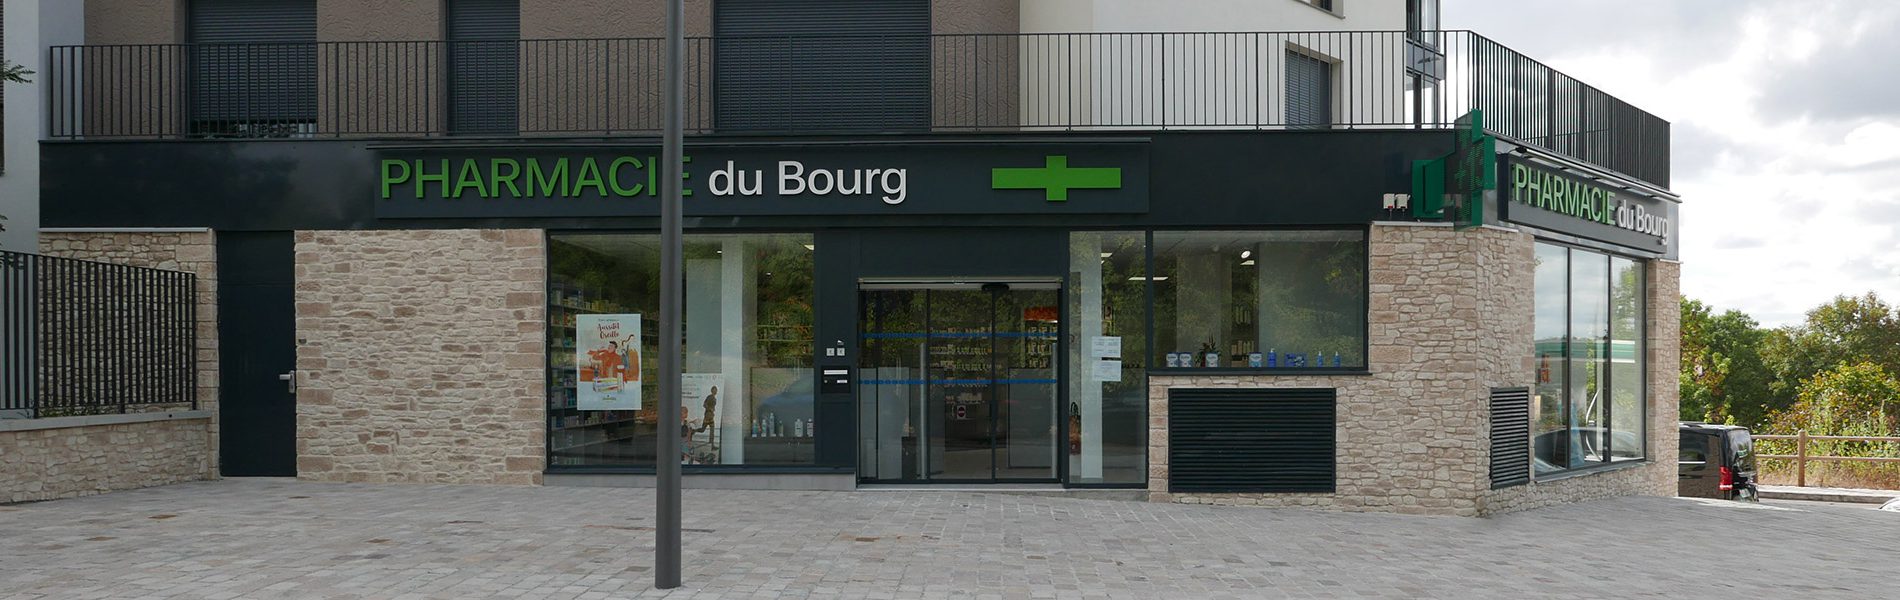 Pharmacie DU BOURG - Image Homepage 1